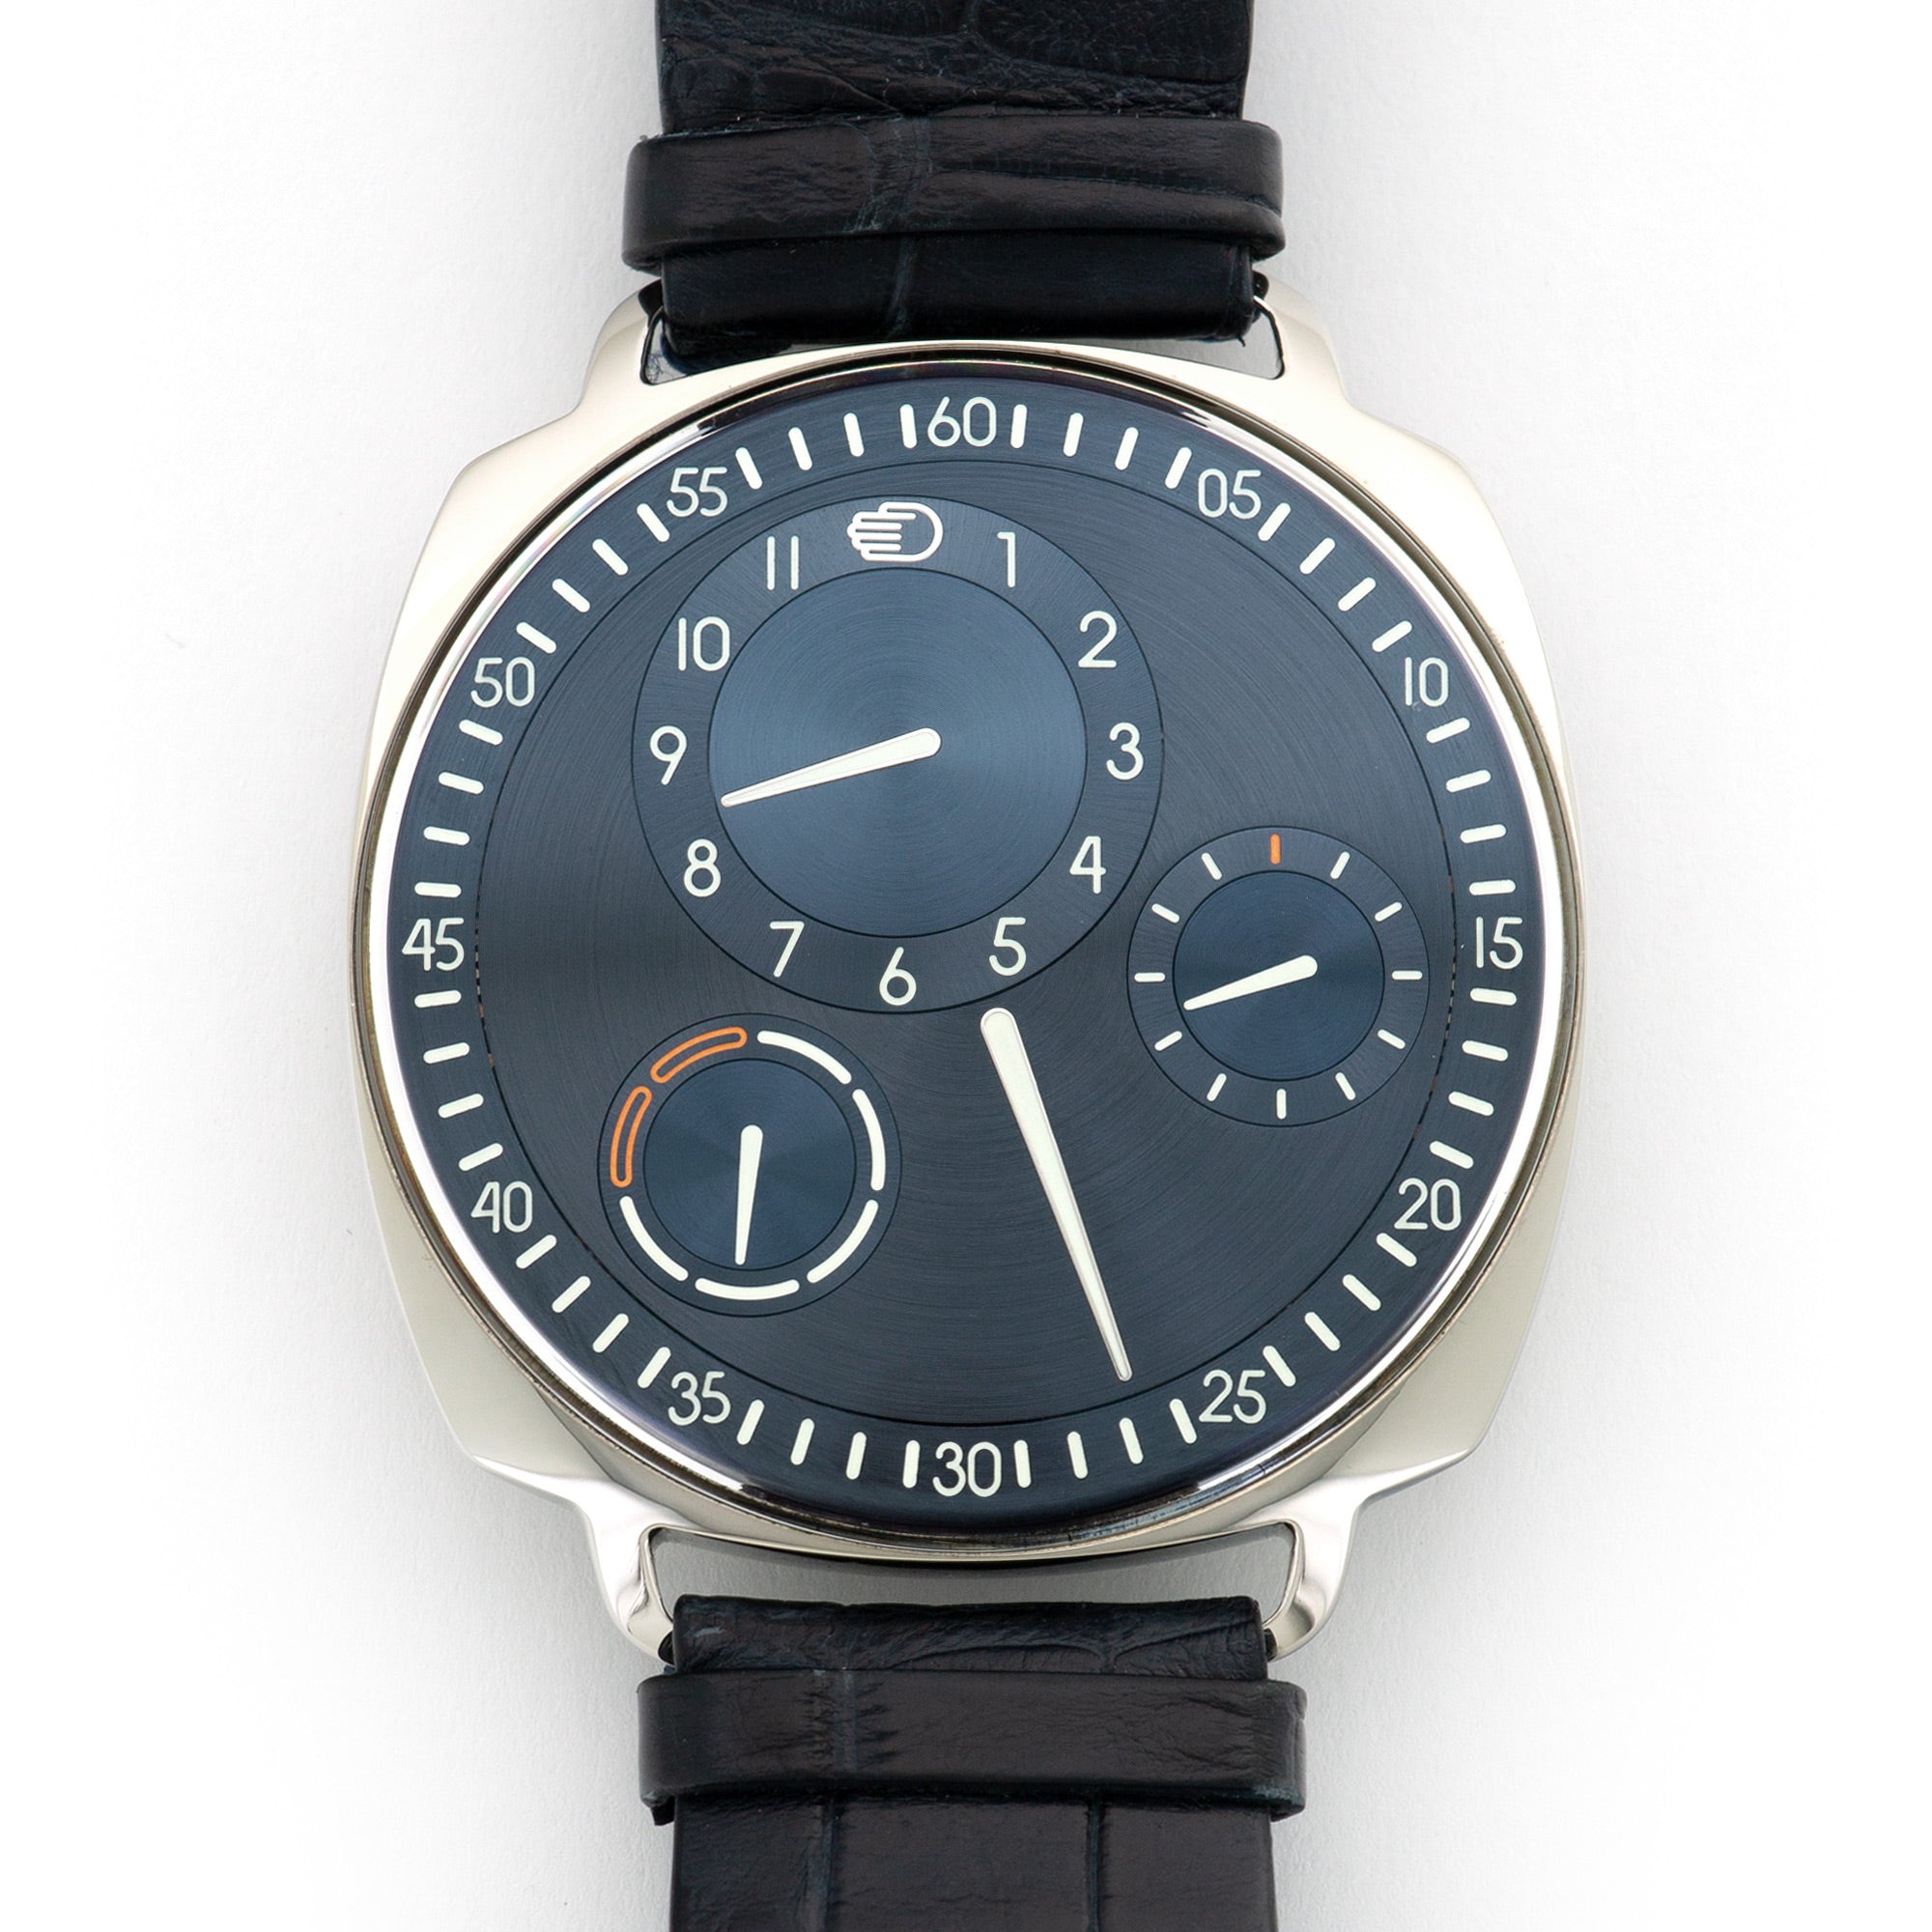 Ressence - Ressence Type 1 Squared Watch - The Keystone Watches